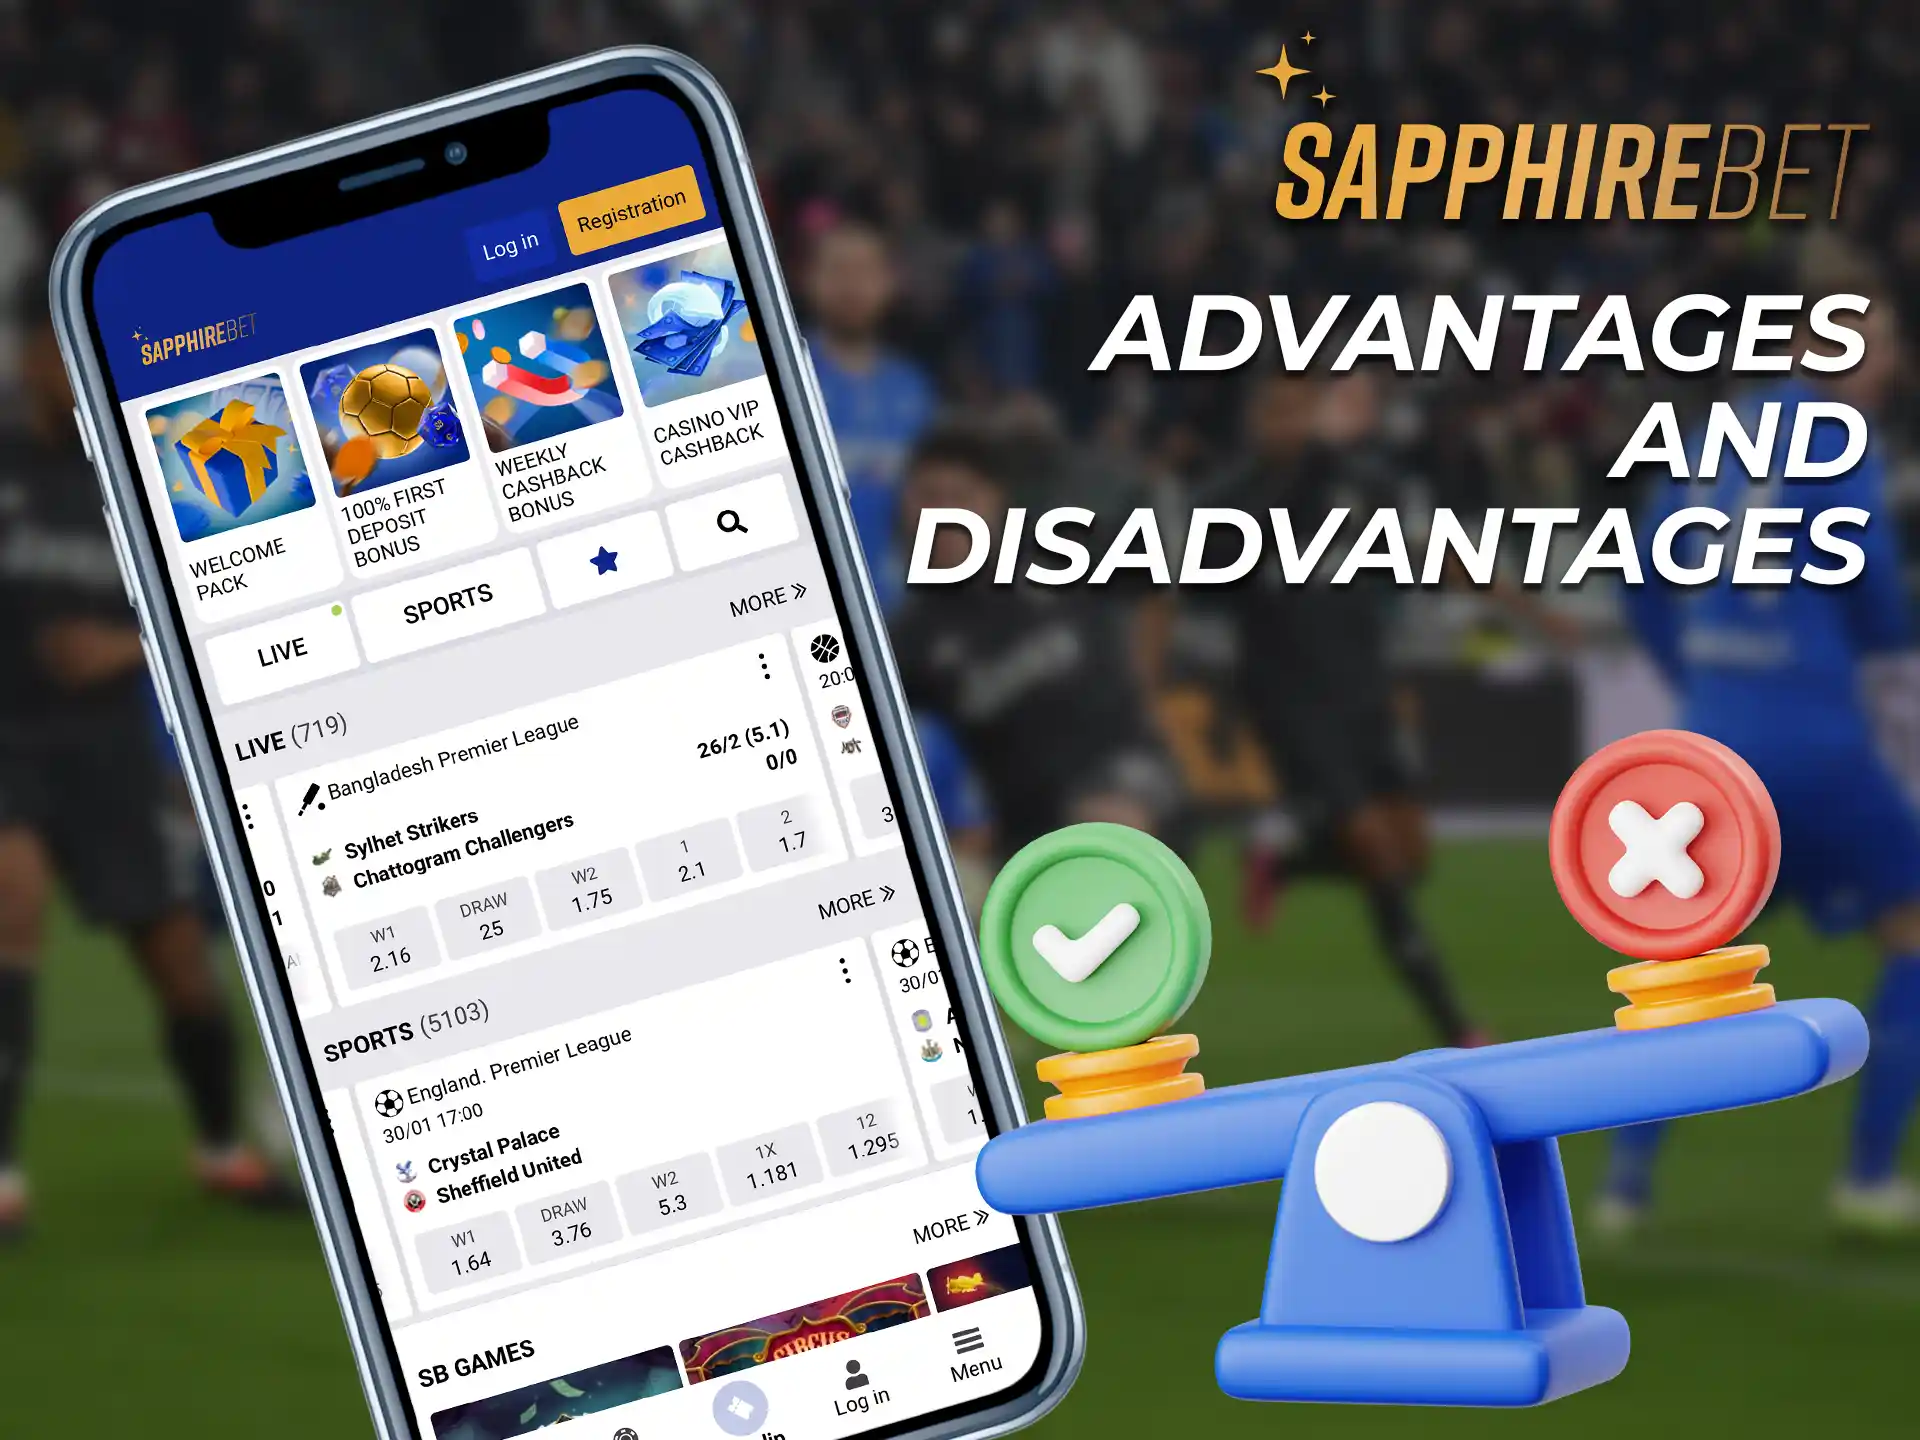 Explore the advantages and disadvantages of the SapphireBet app.